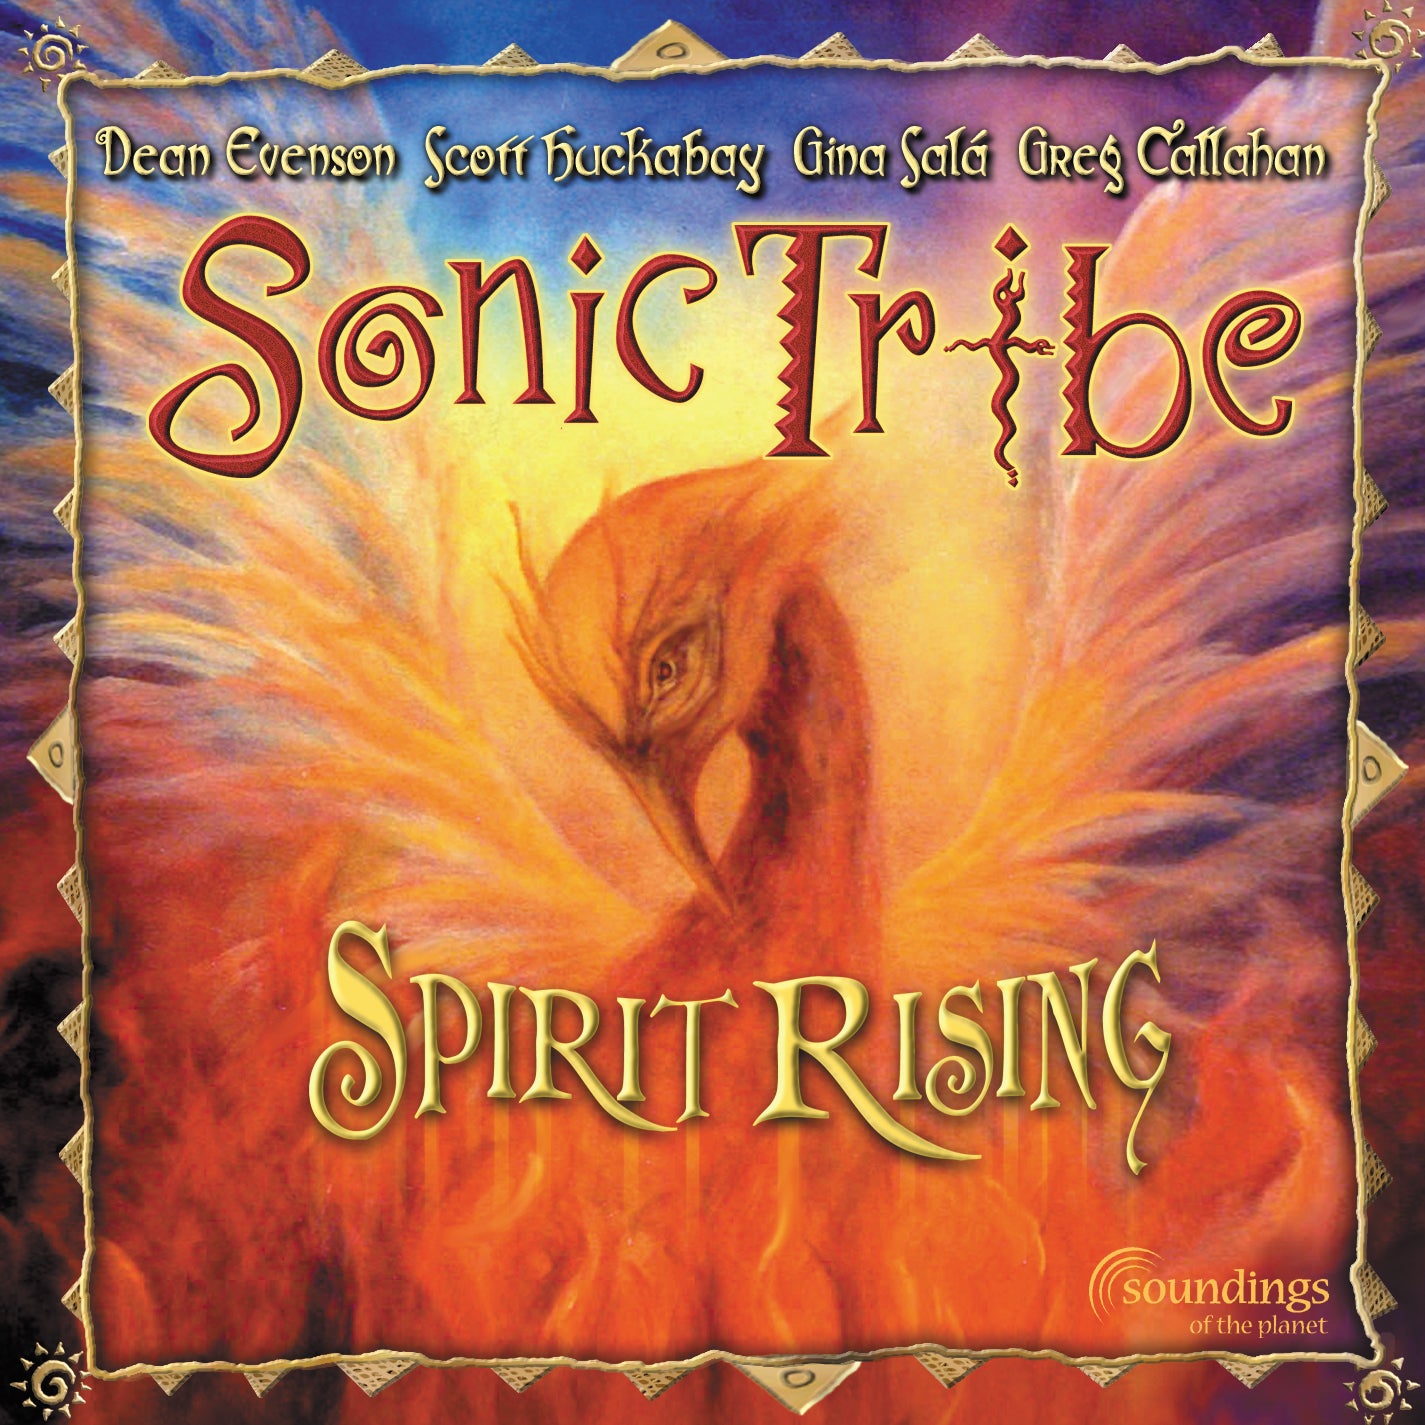 sonic tribe - spirit rising Dean Evenson Scott Huckabay GIna Sala Greg Callahan